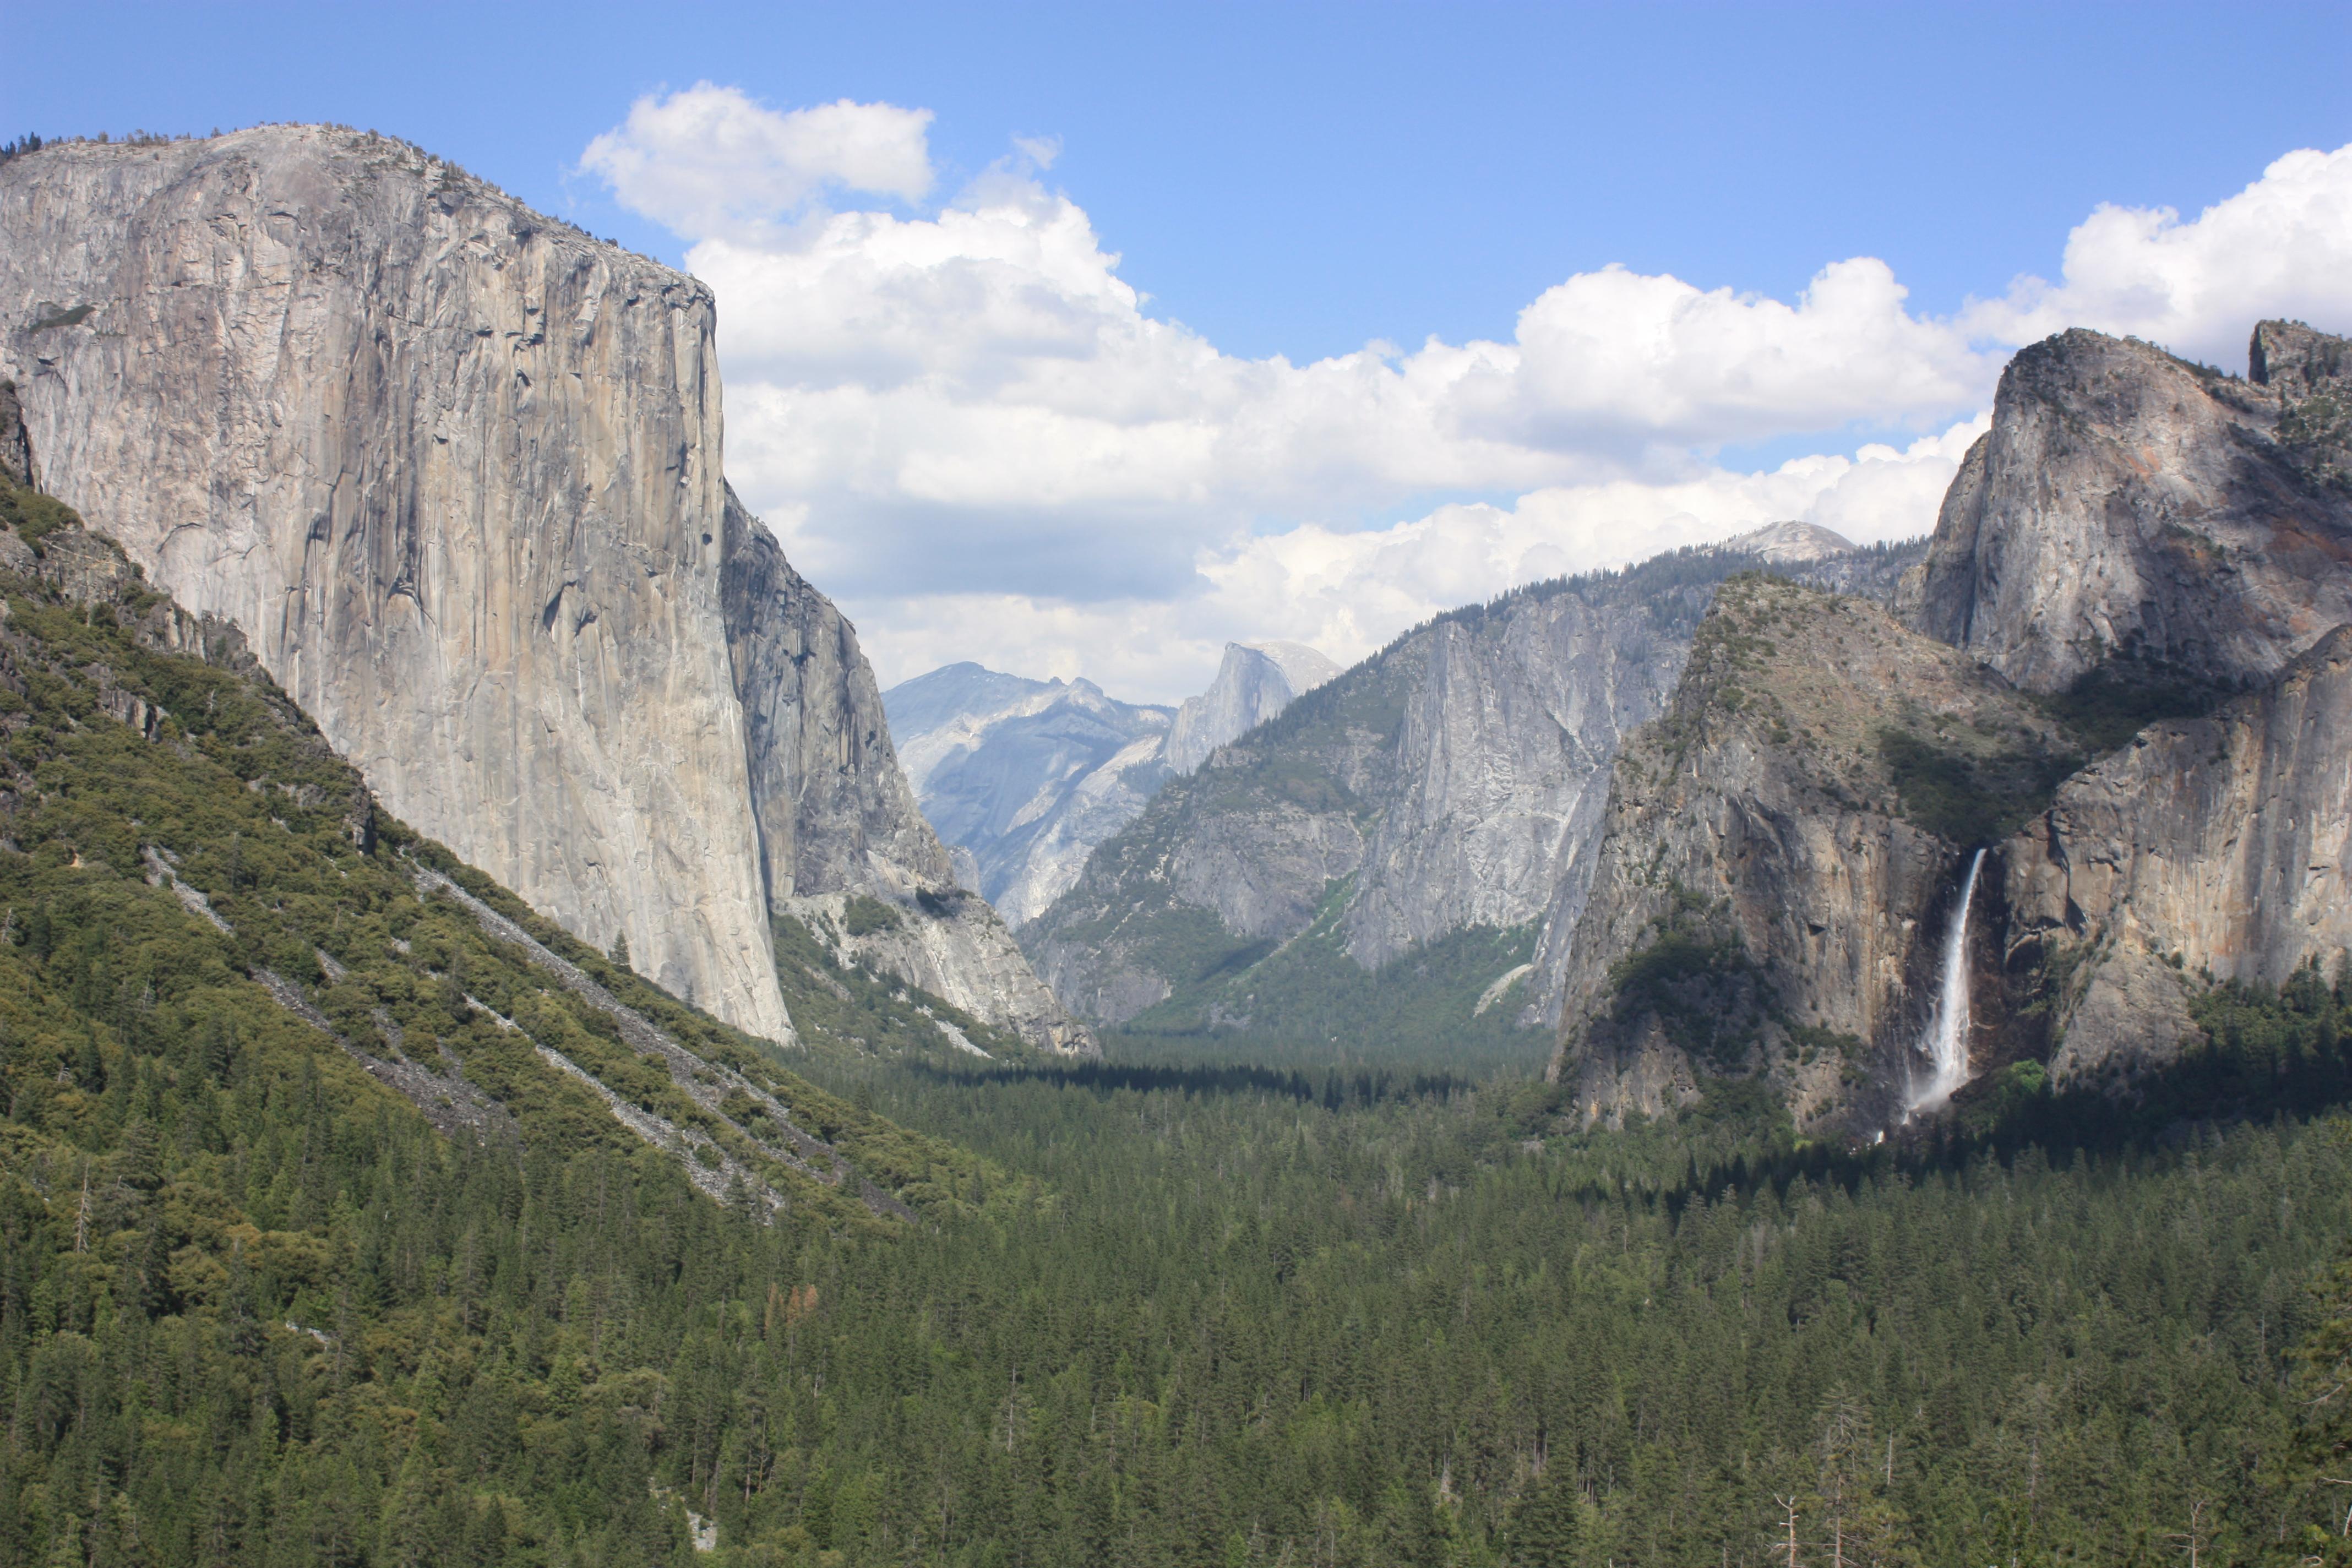 Yosemite National Park, El Capitan, Half Dome, and Bridalveil